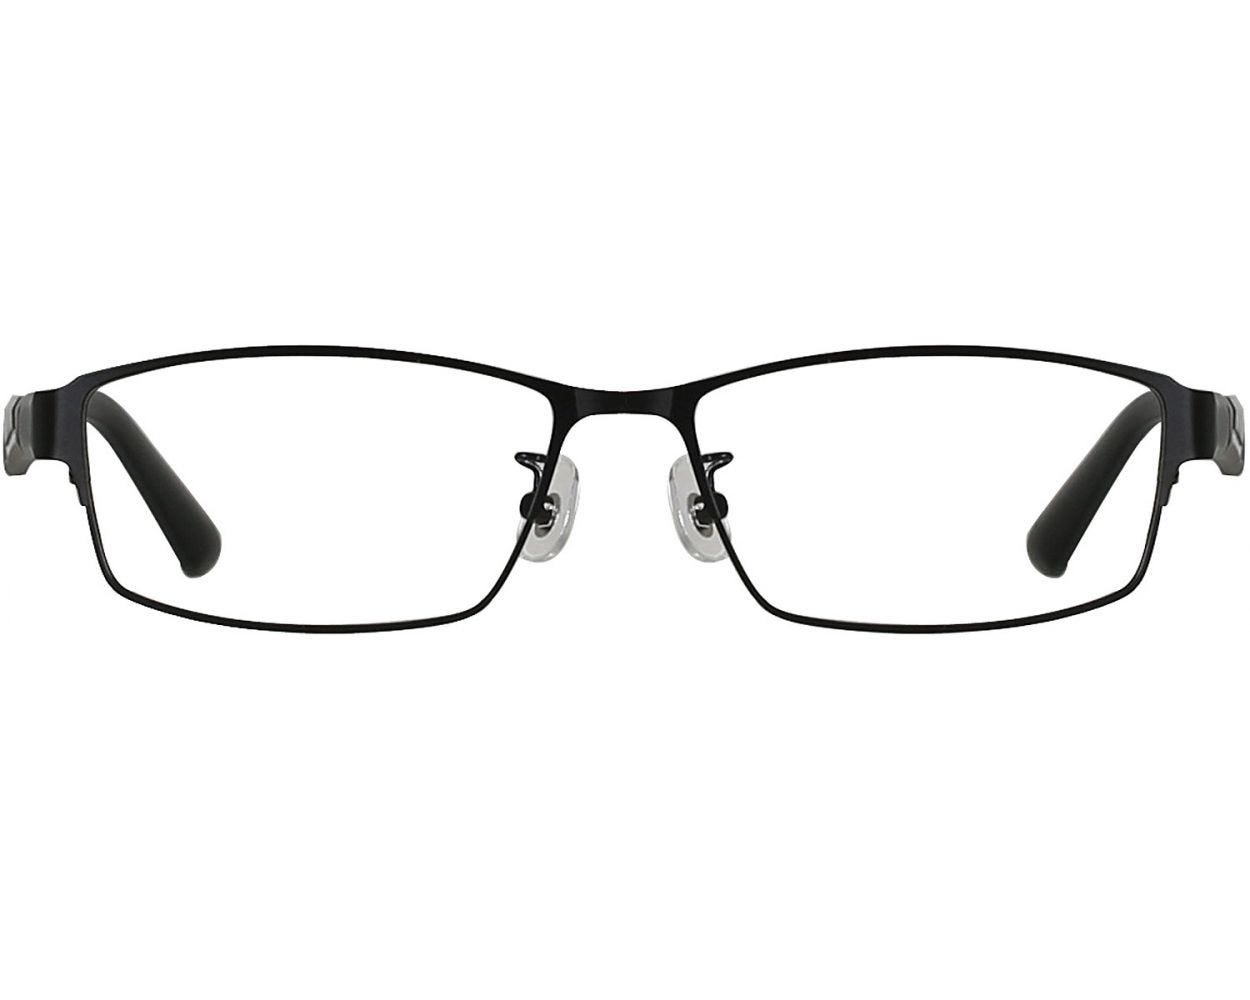 rectangle shape glasses